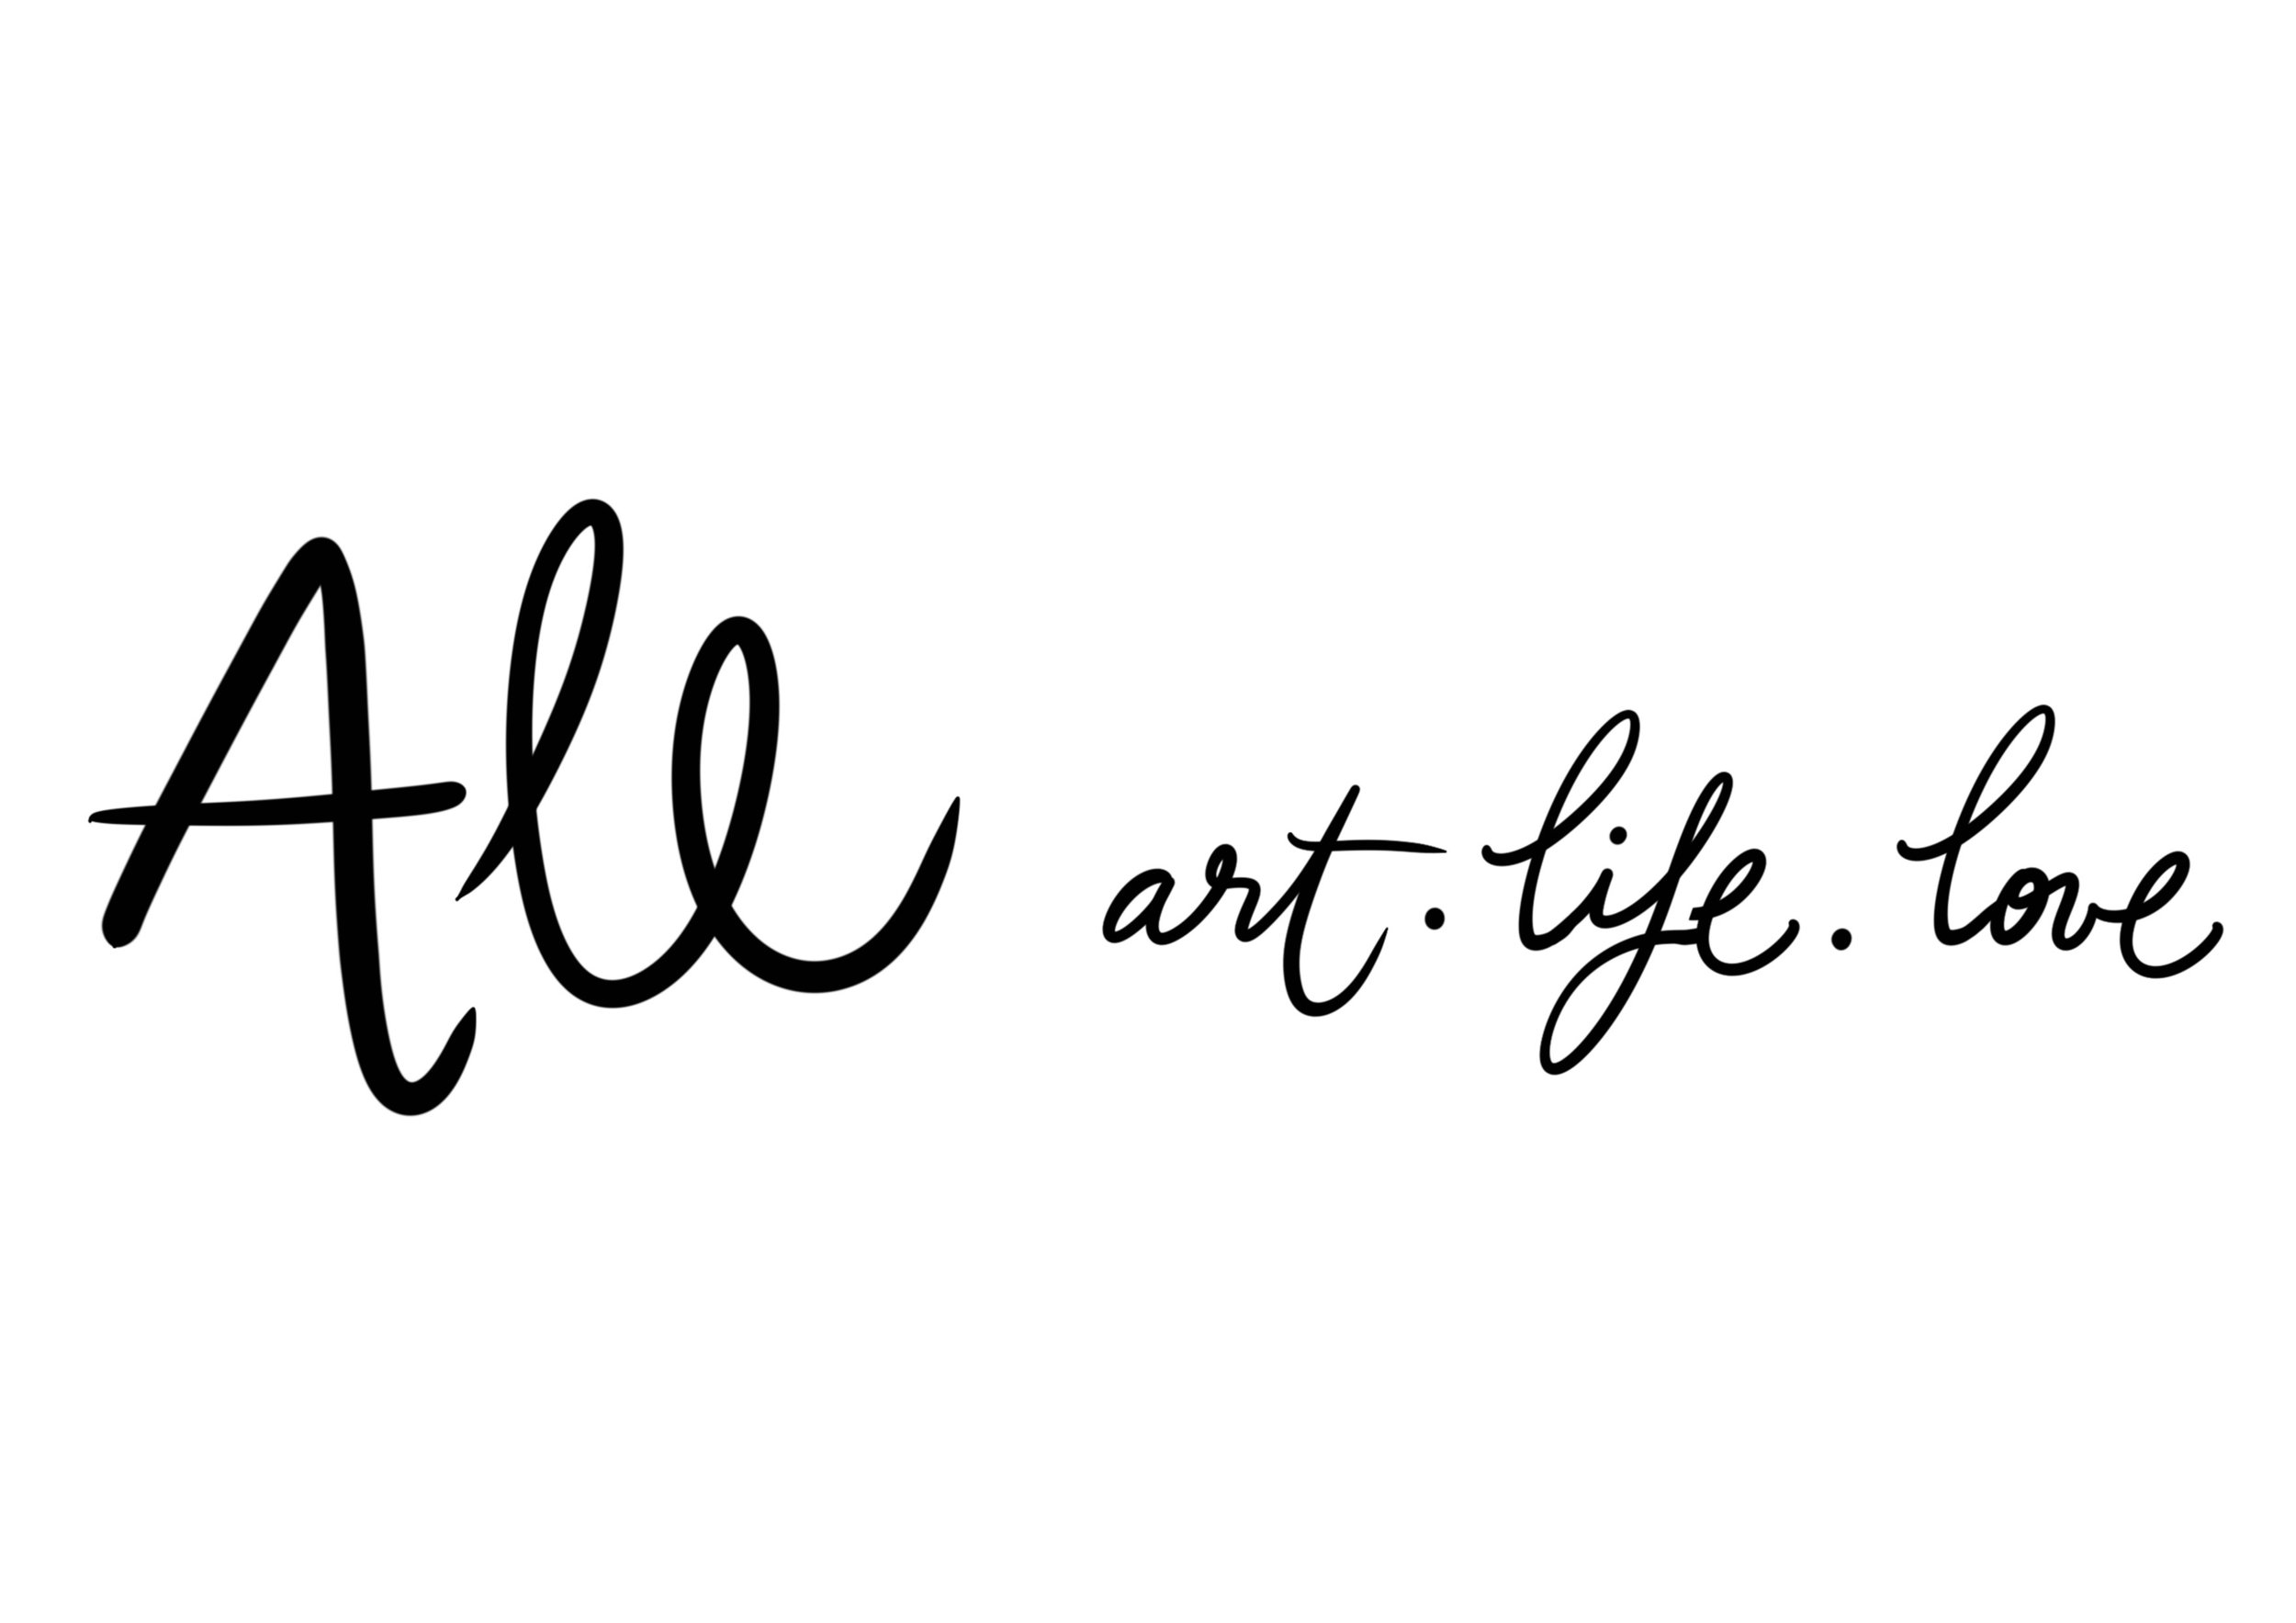 ALL art life love